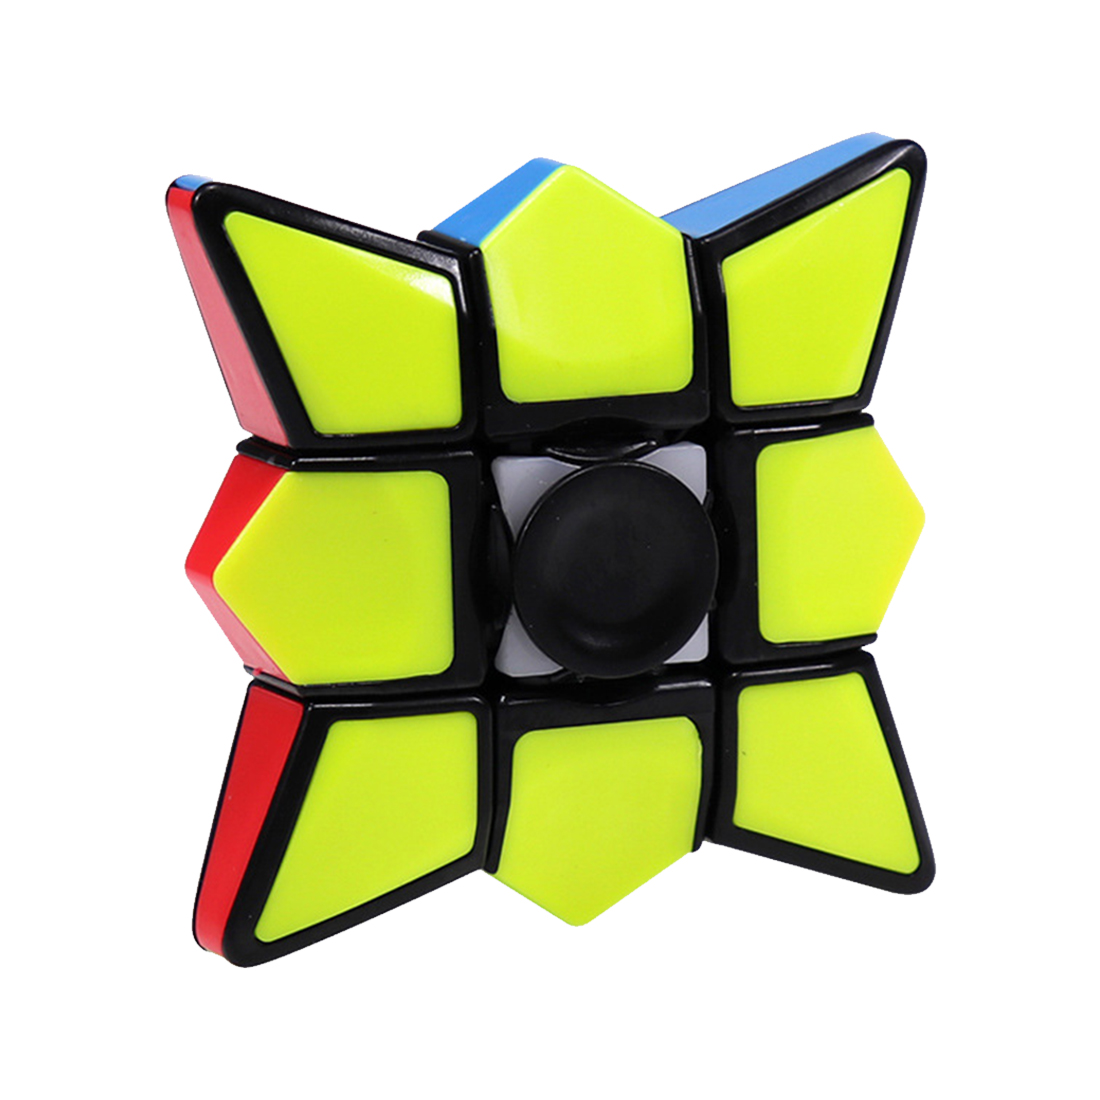 FanXin 1x3x3 Spinner Speed Cube